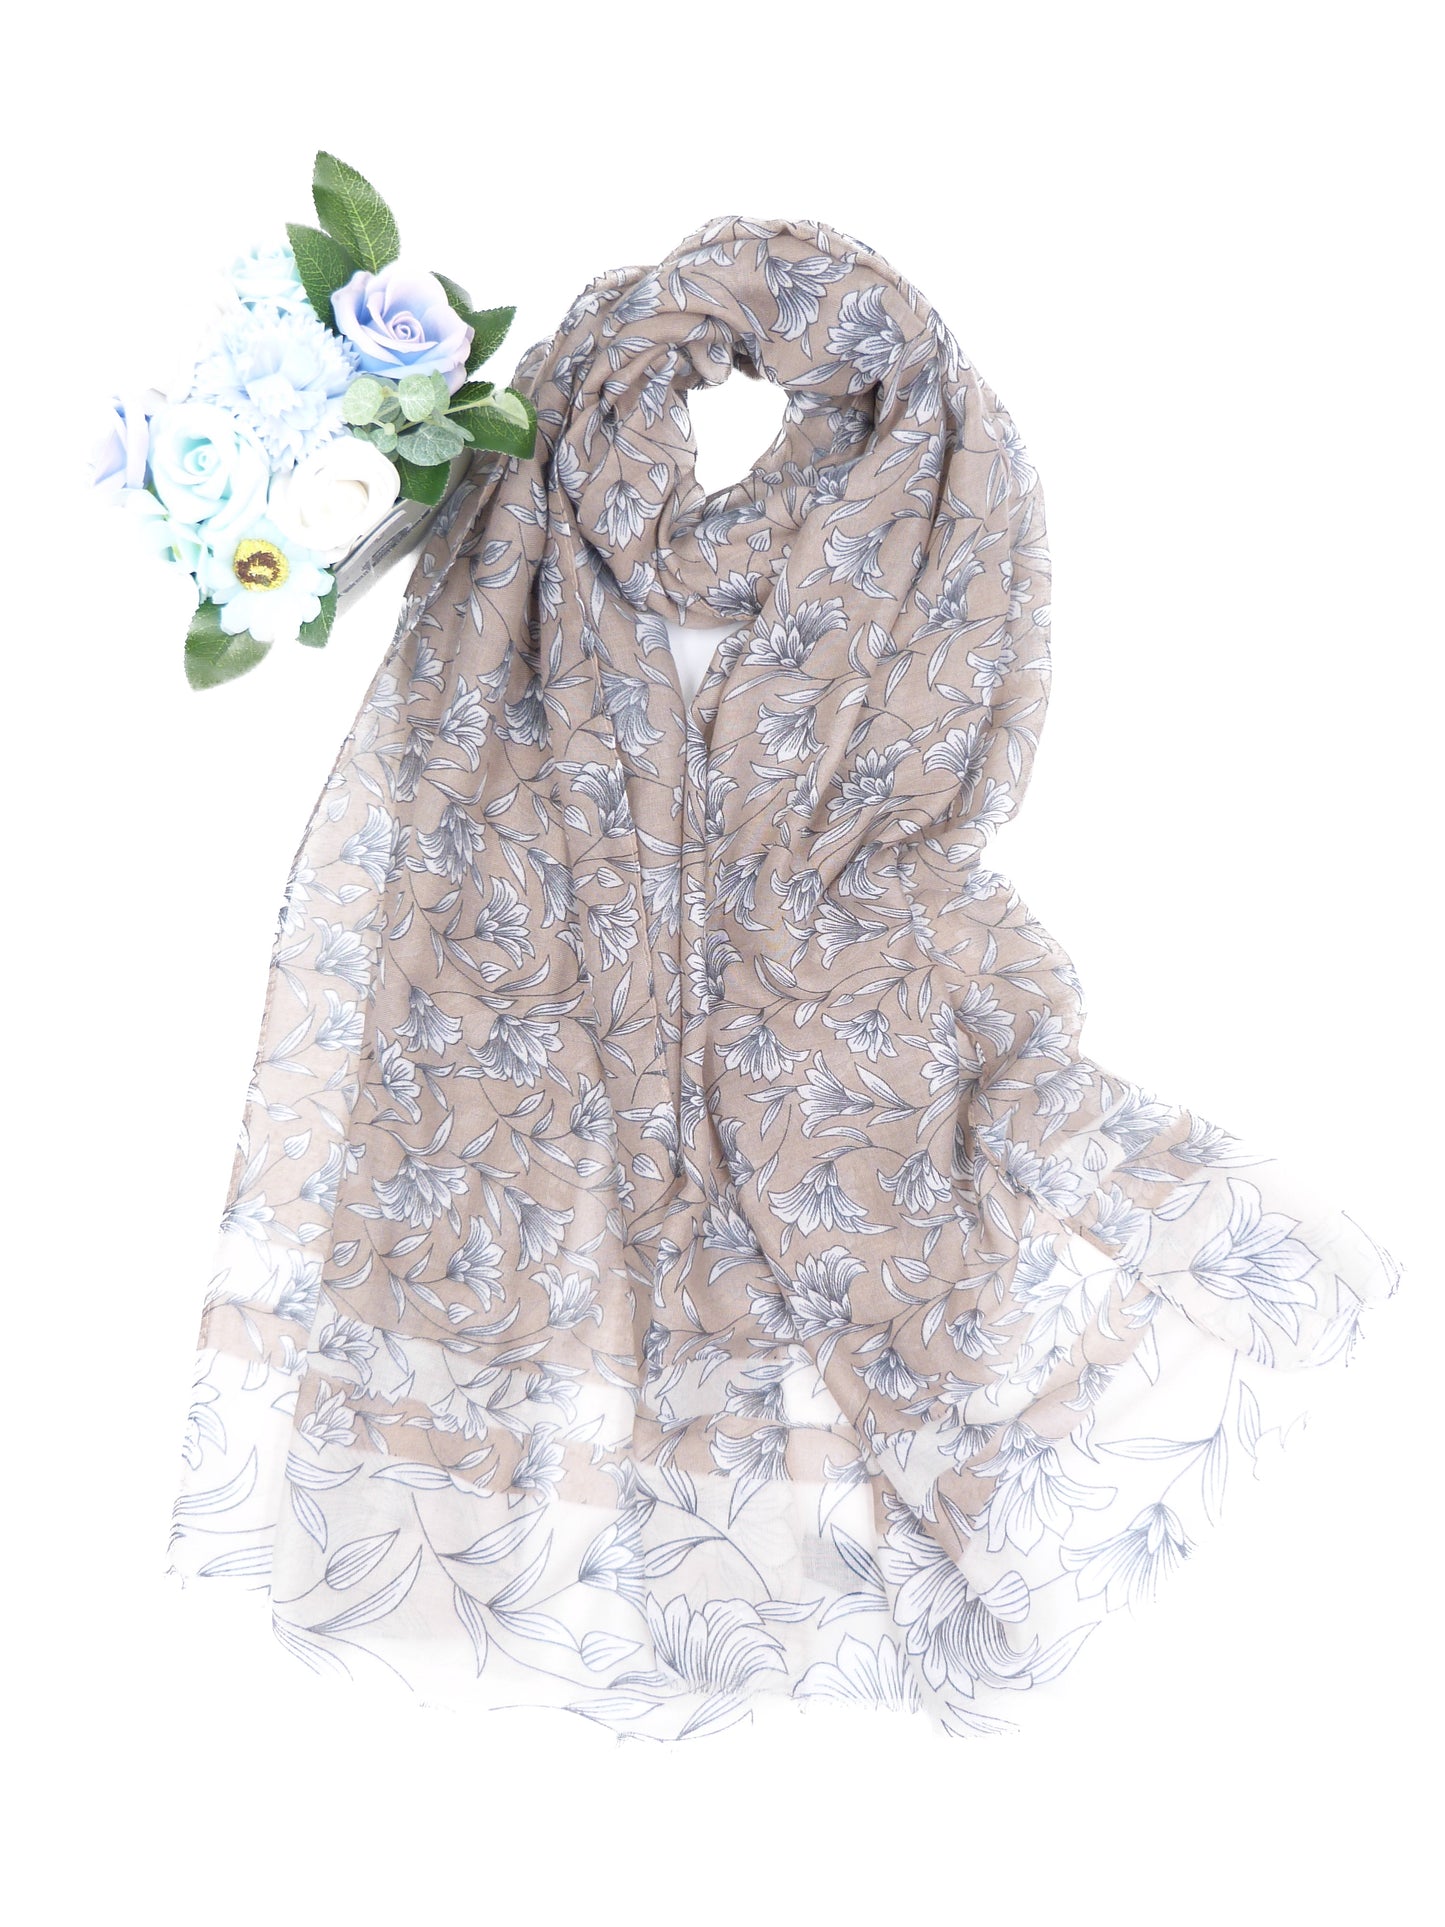 Lily Flower Print Fashion Scarf Shaws Wrap